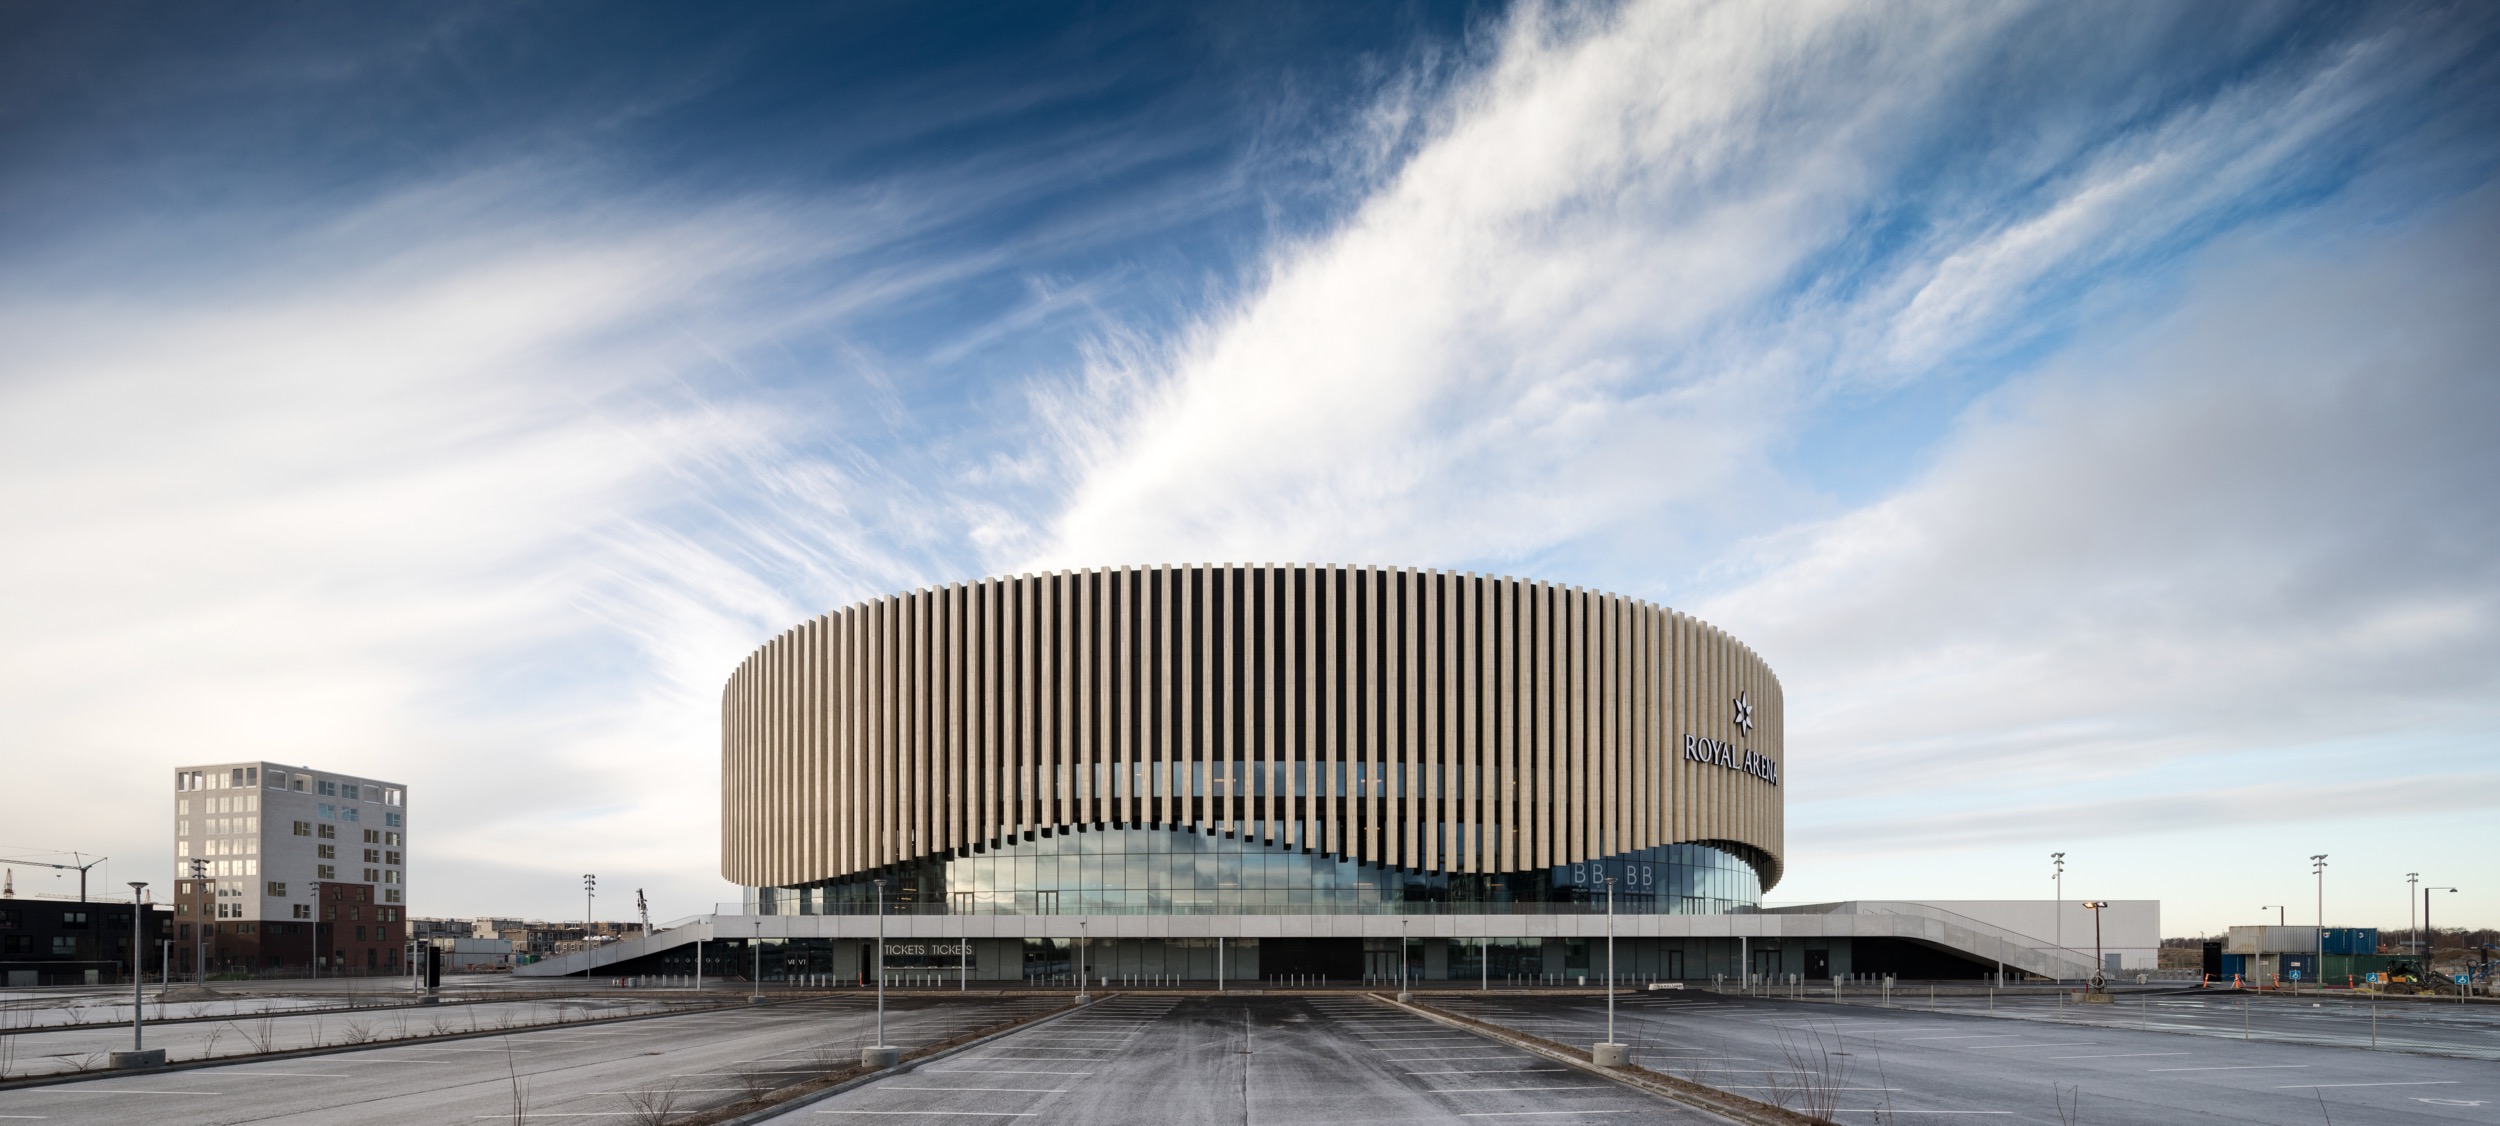 banan to uger legemliggøre Royal Arena - Danish Architecture Center - DAC